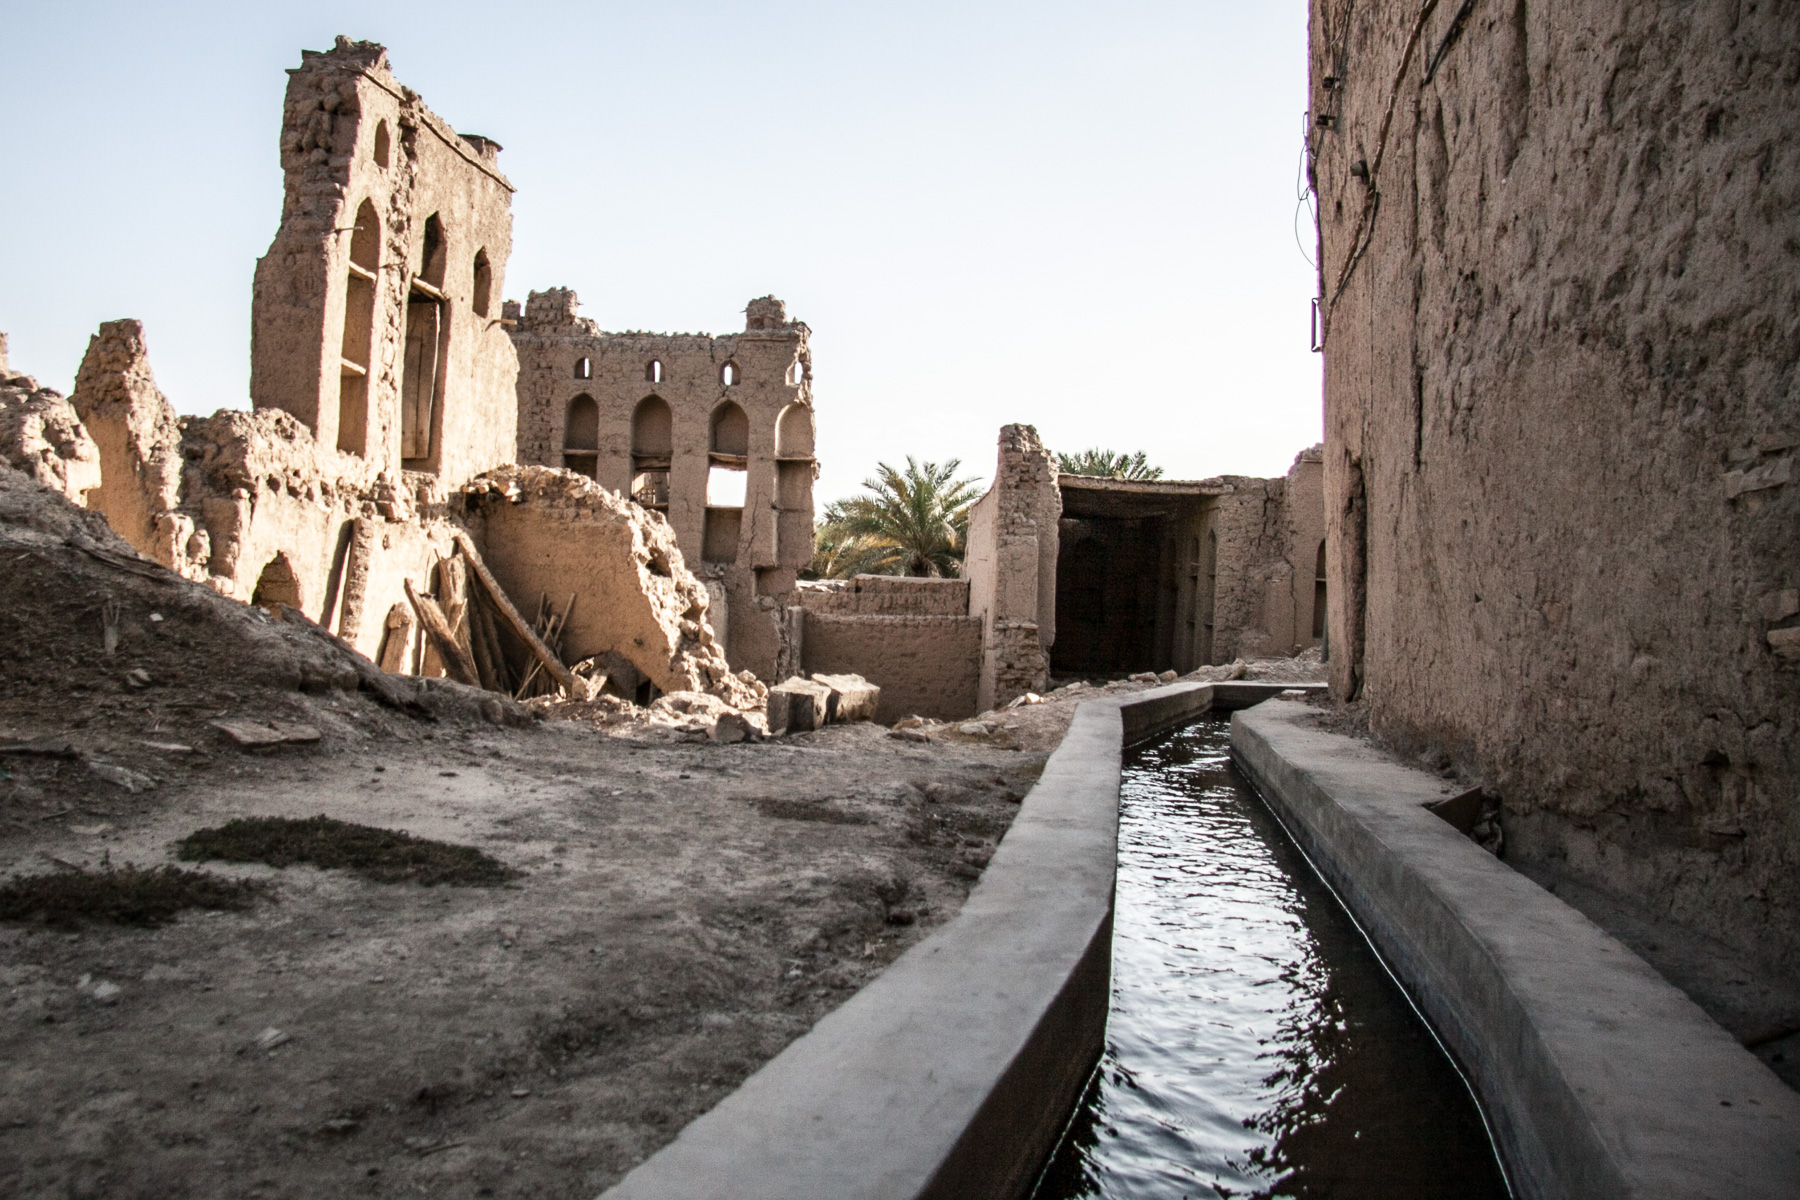 hyperfocale-daniel-fine-abandonned-103.jpg Village en pisé - Oman abandonned